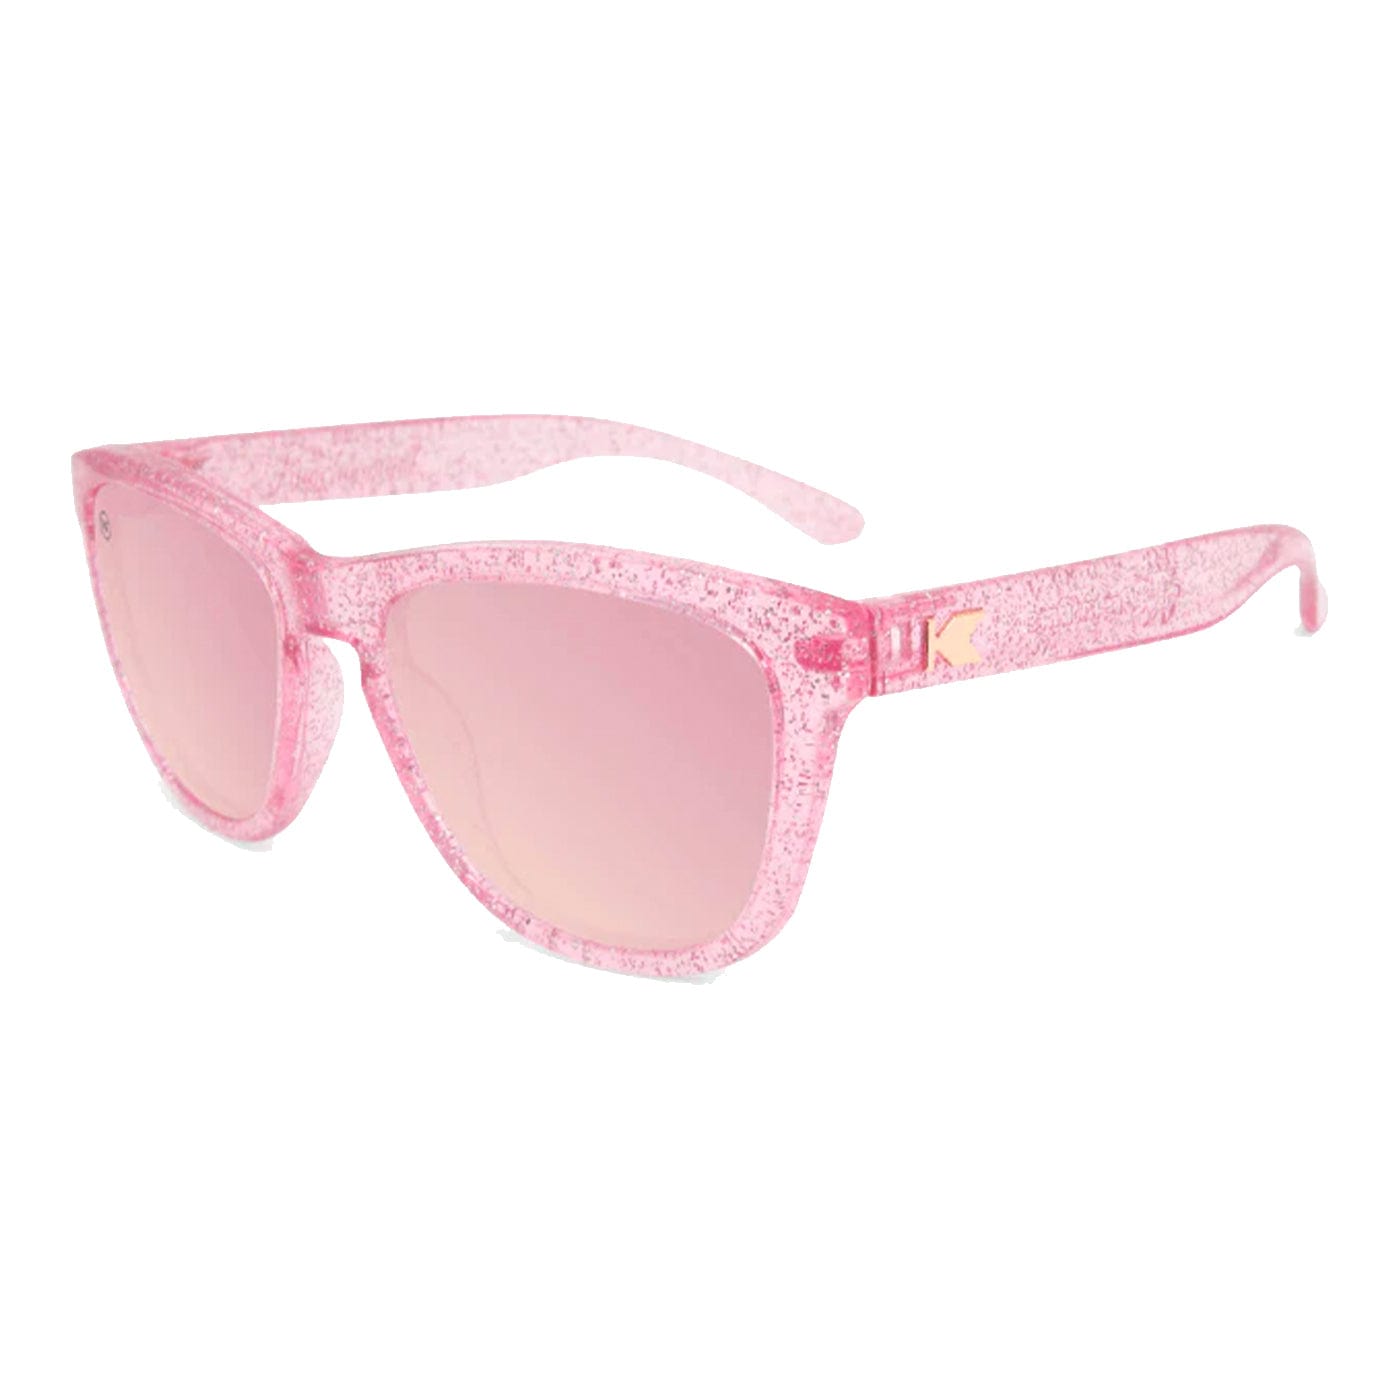 Knockaround Sunglasses Pink Sparkle Kids Premiums XMiles